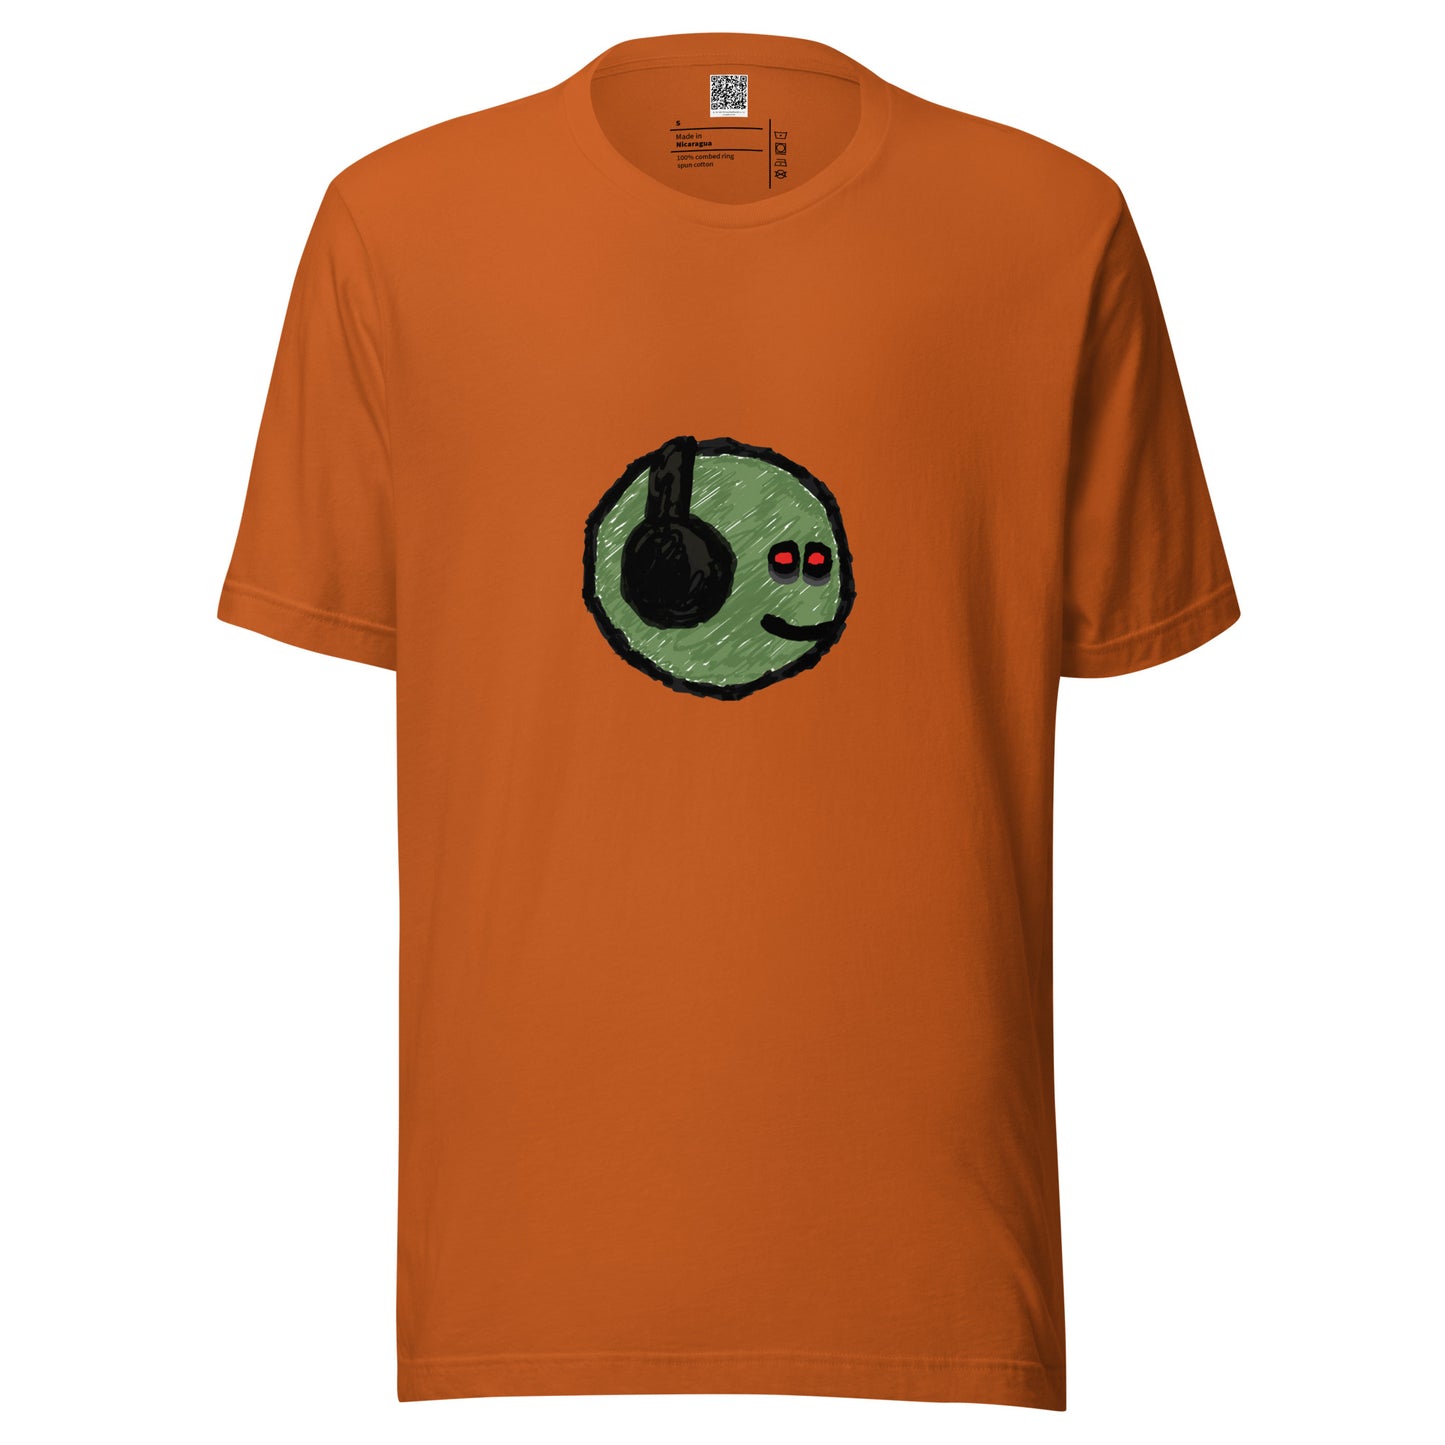 Unisex t-shirt - mfers zombie head